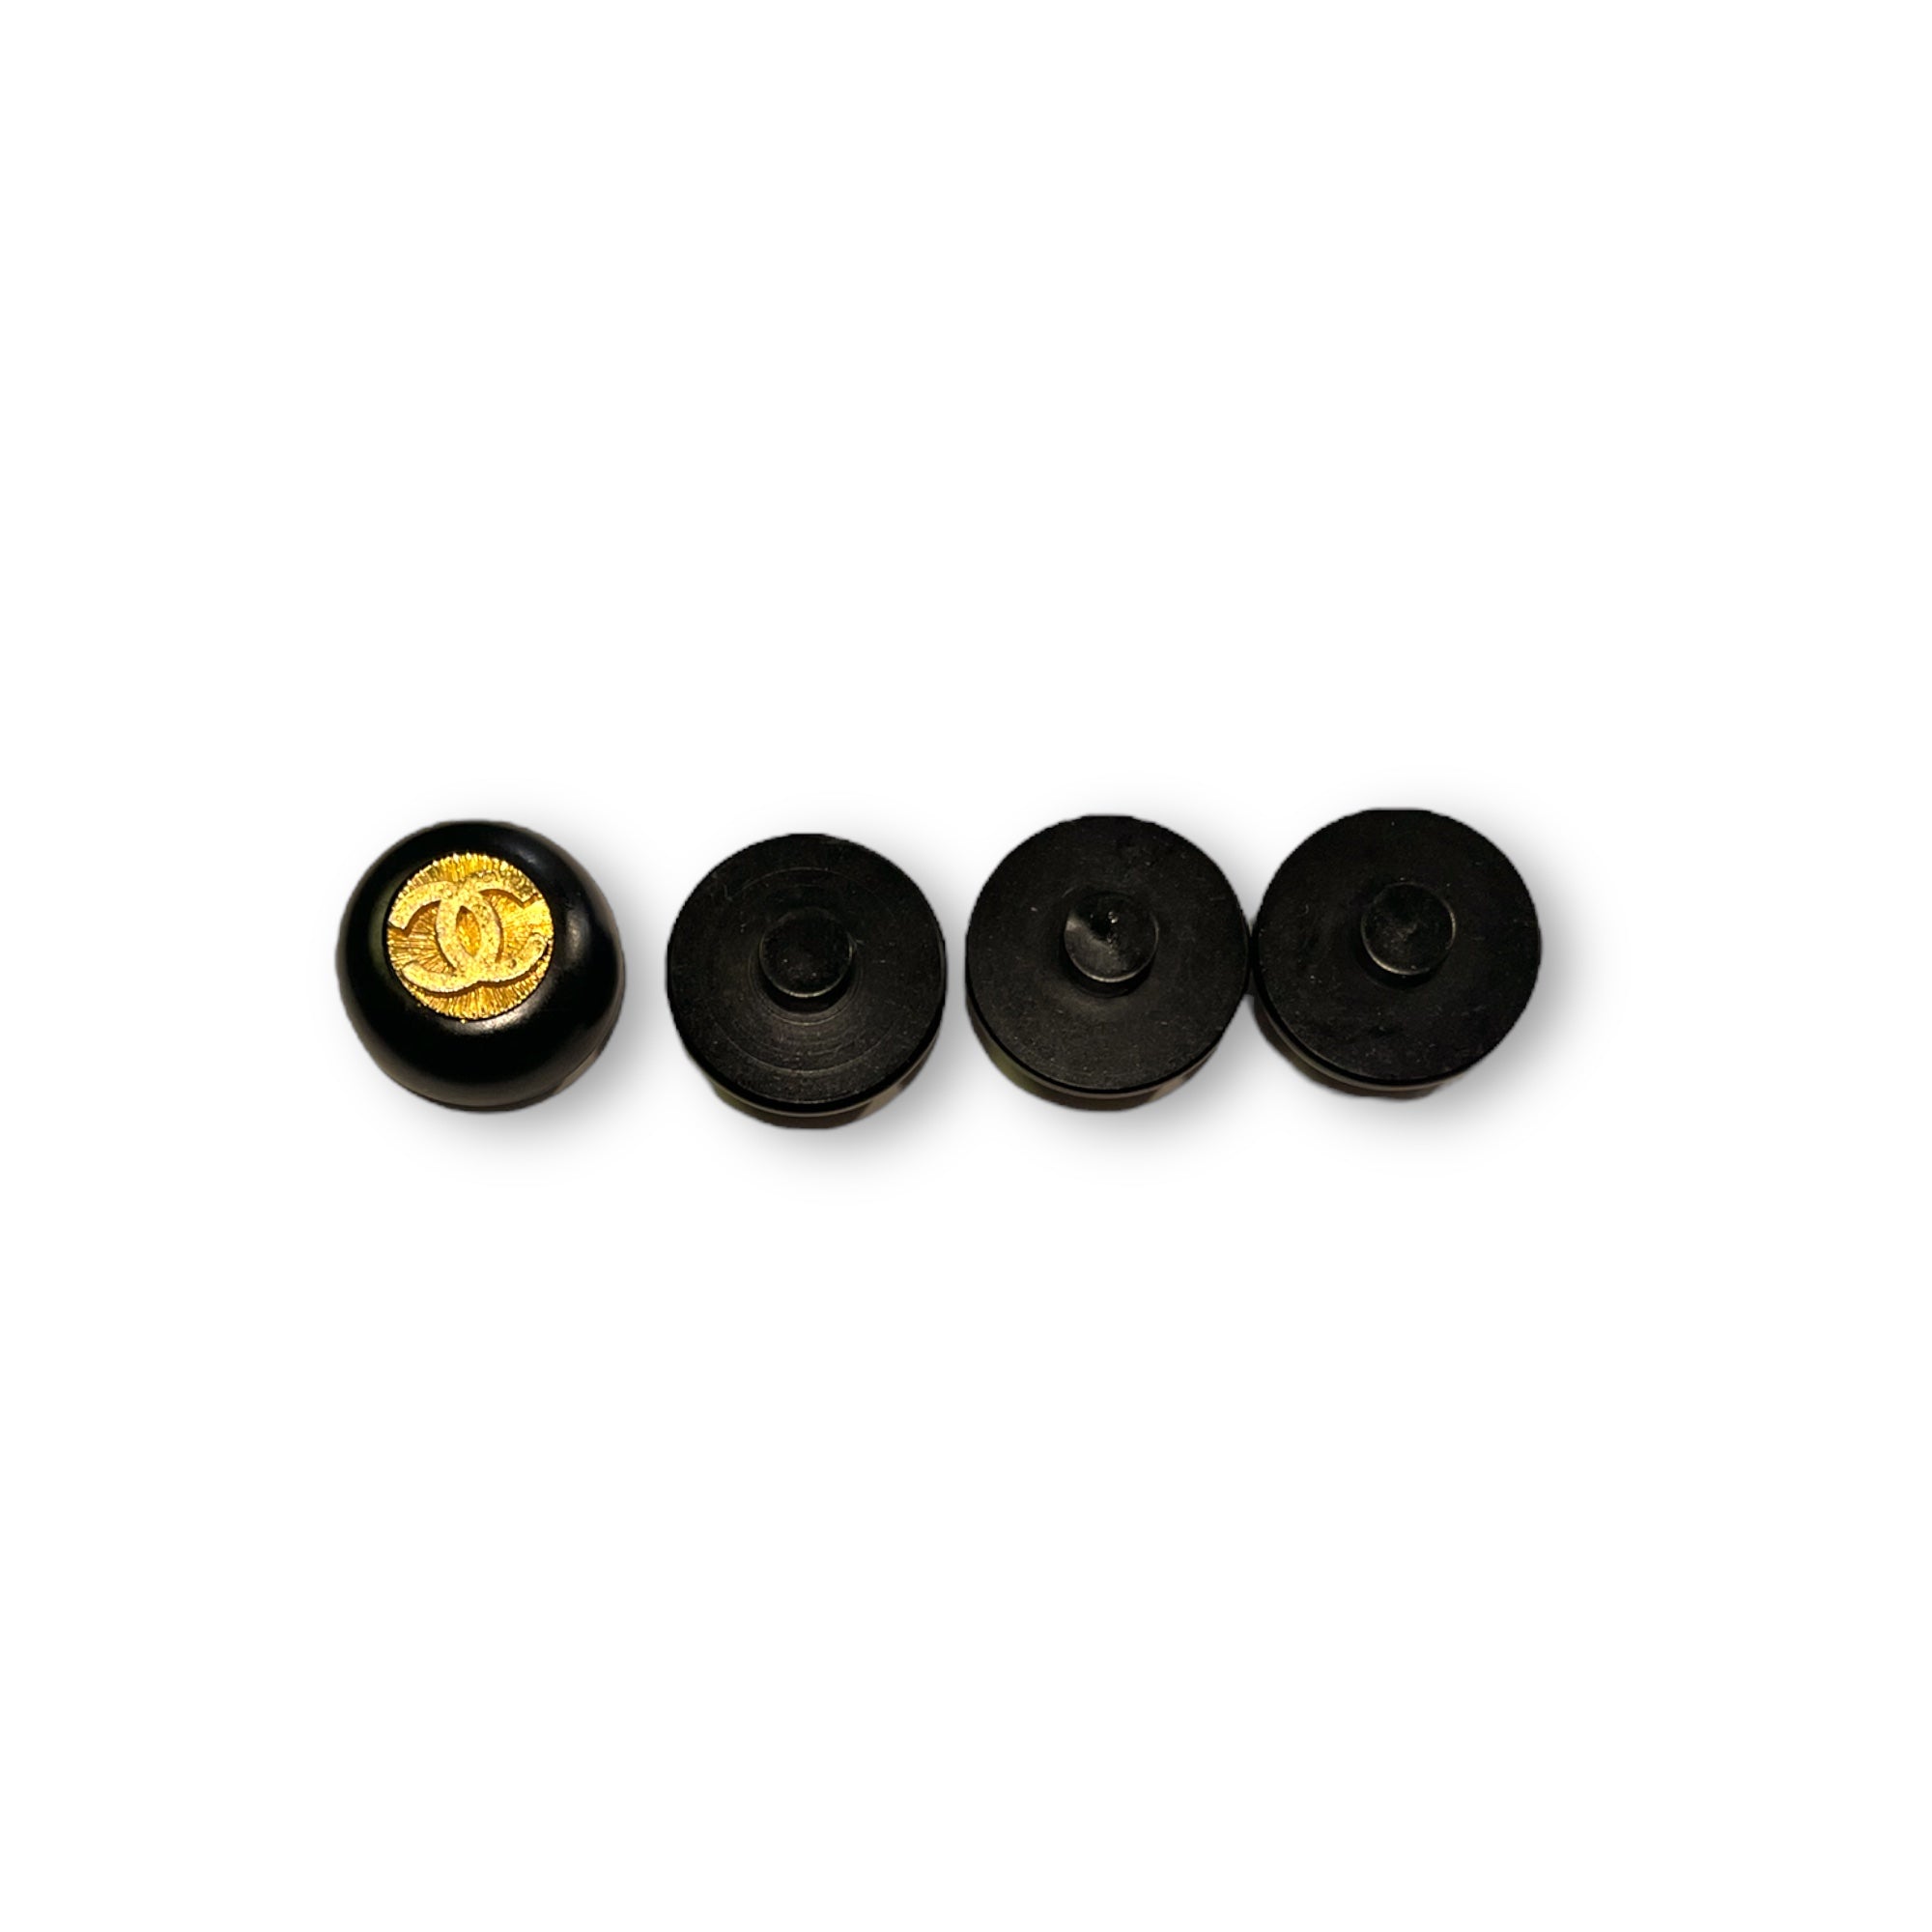 CHANEL Vintage AUTHENTIC Gold Metal CC Interlocking Logo Set in Black Plastic Buttons (Four)